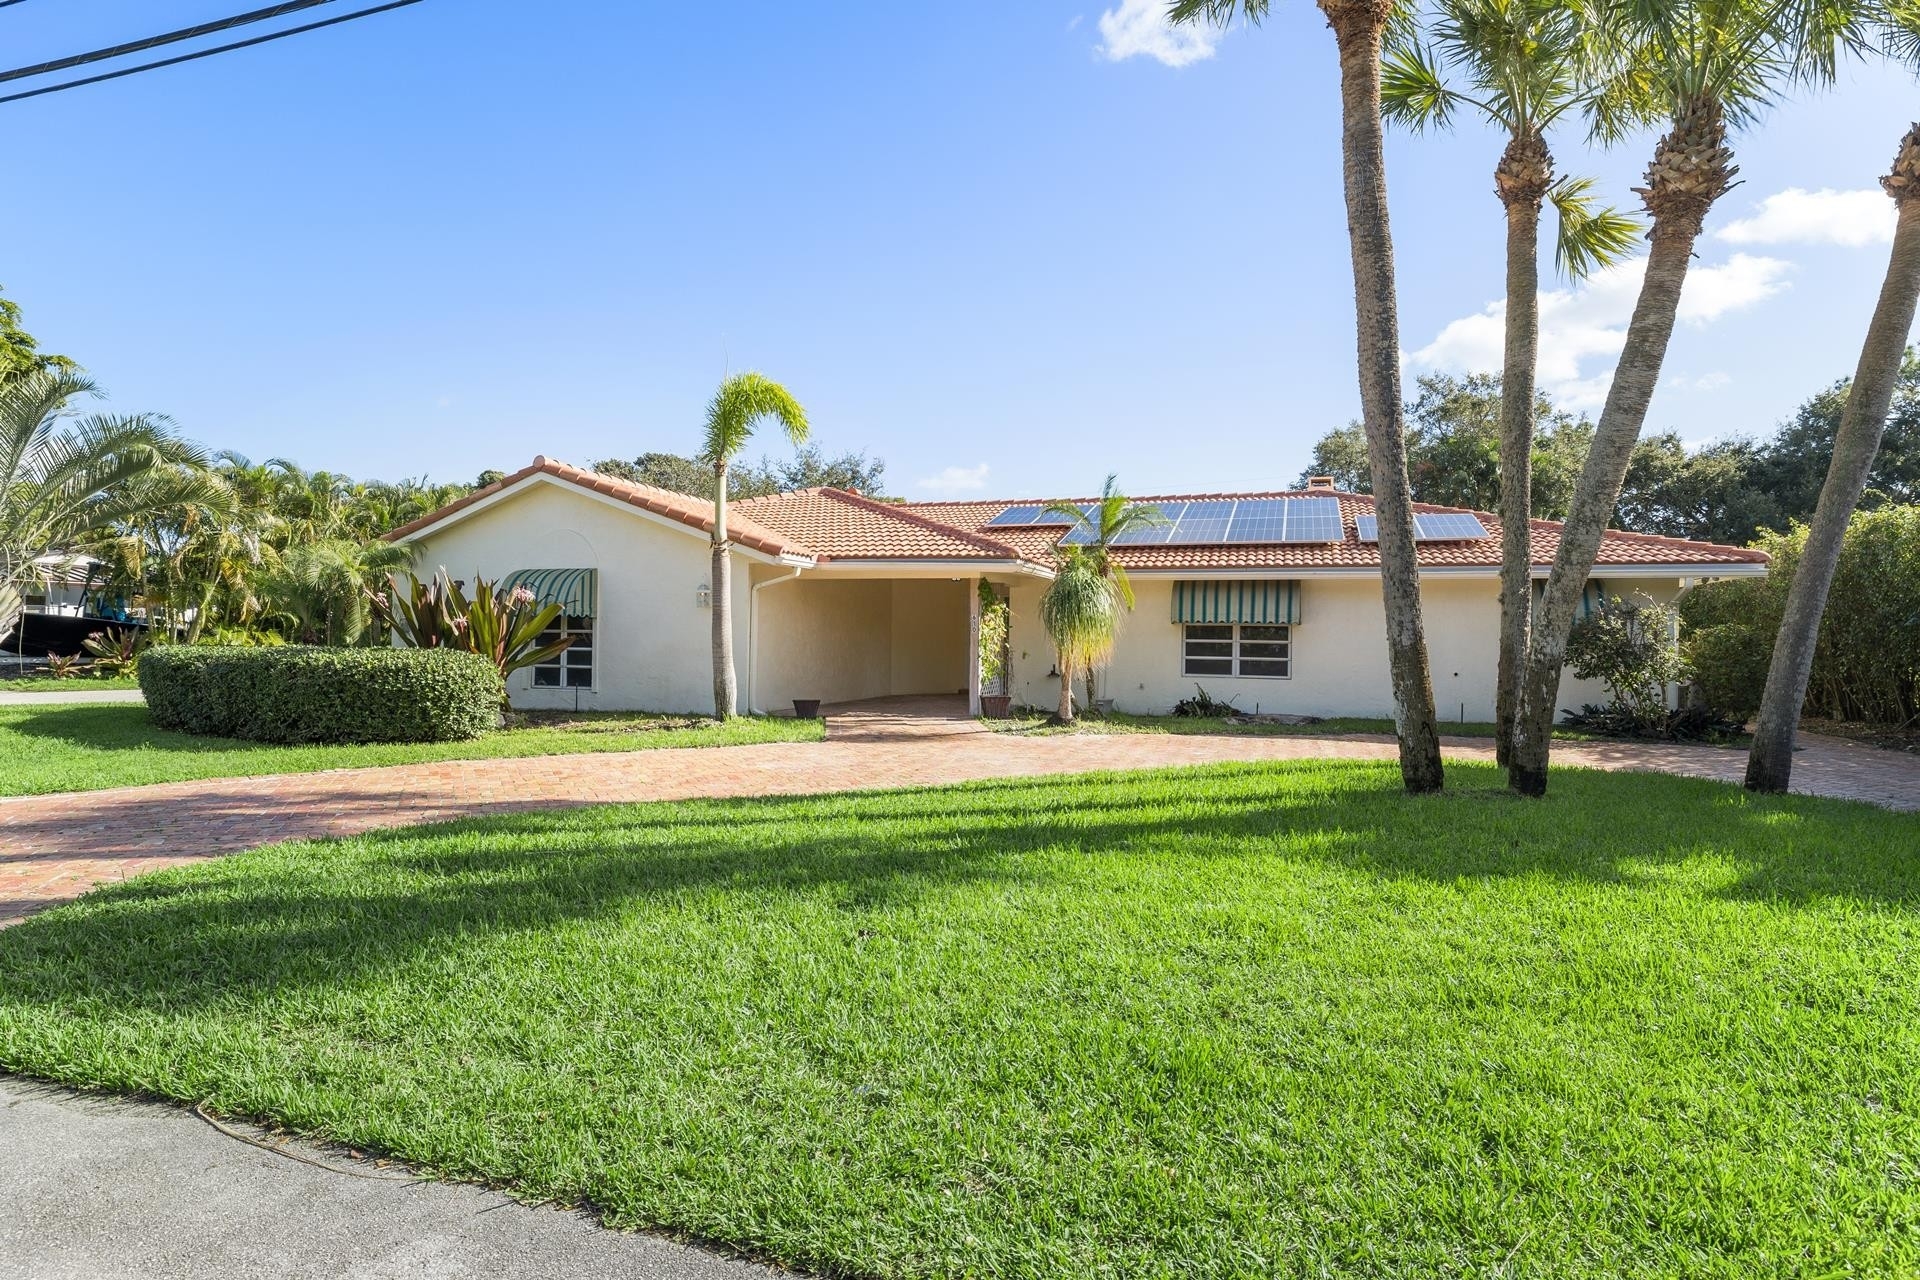 Single Family Home for Sale at Central Boca Raton, Boca Raton, FL 33486